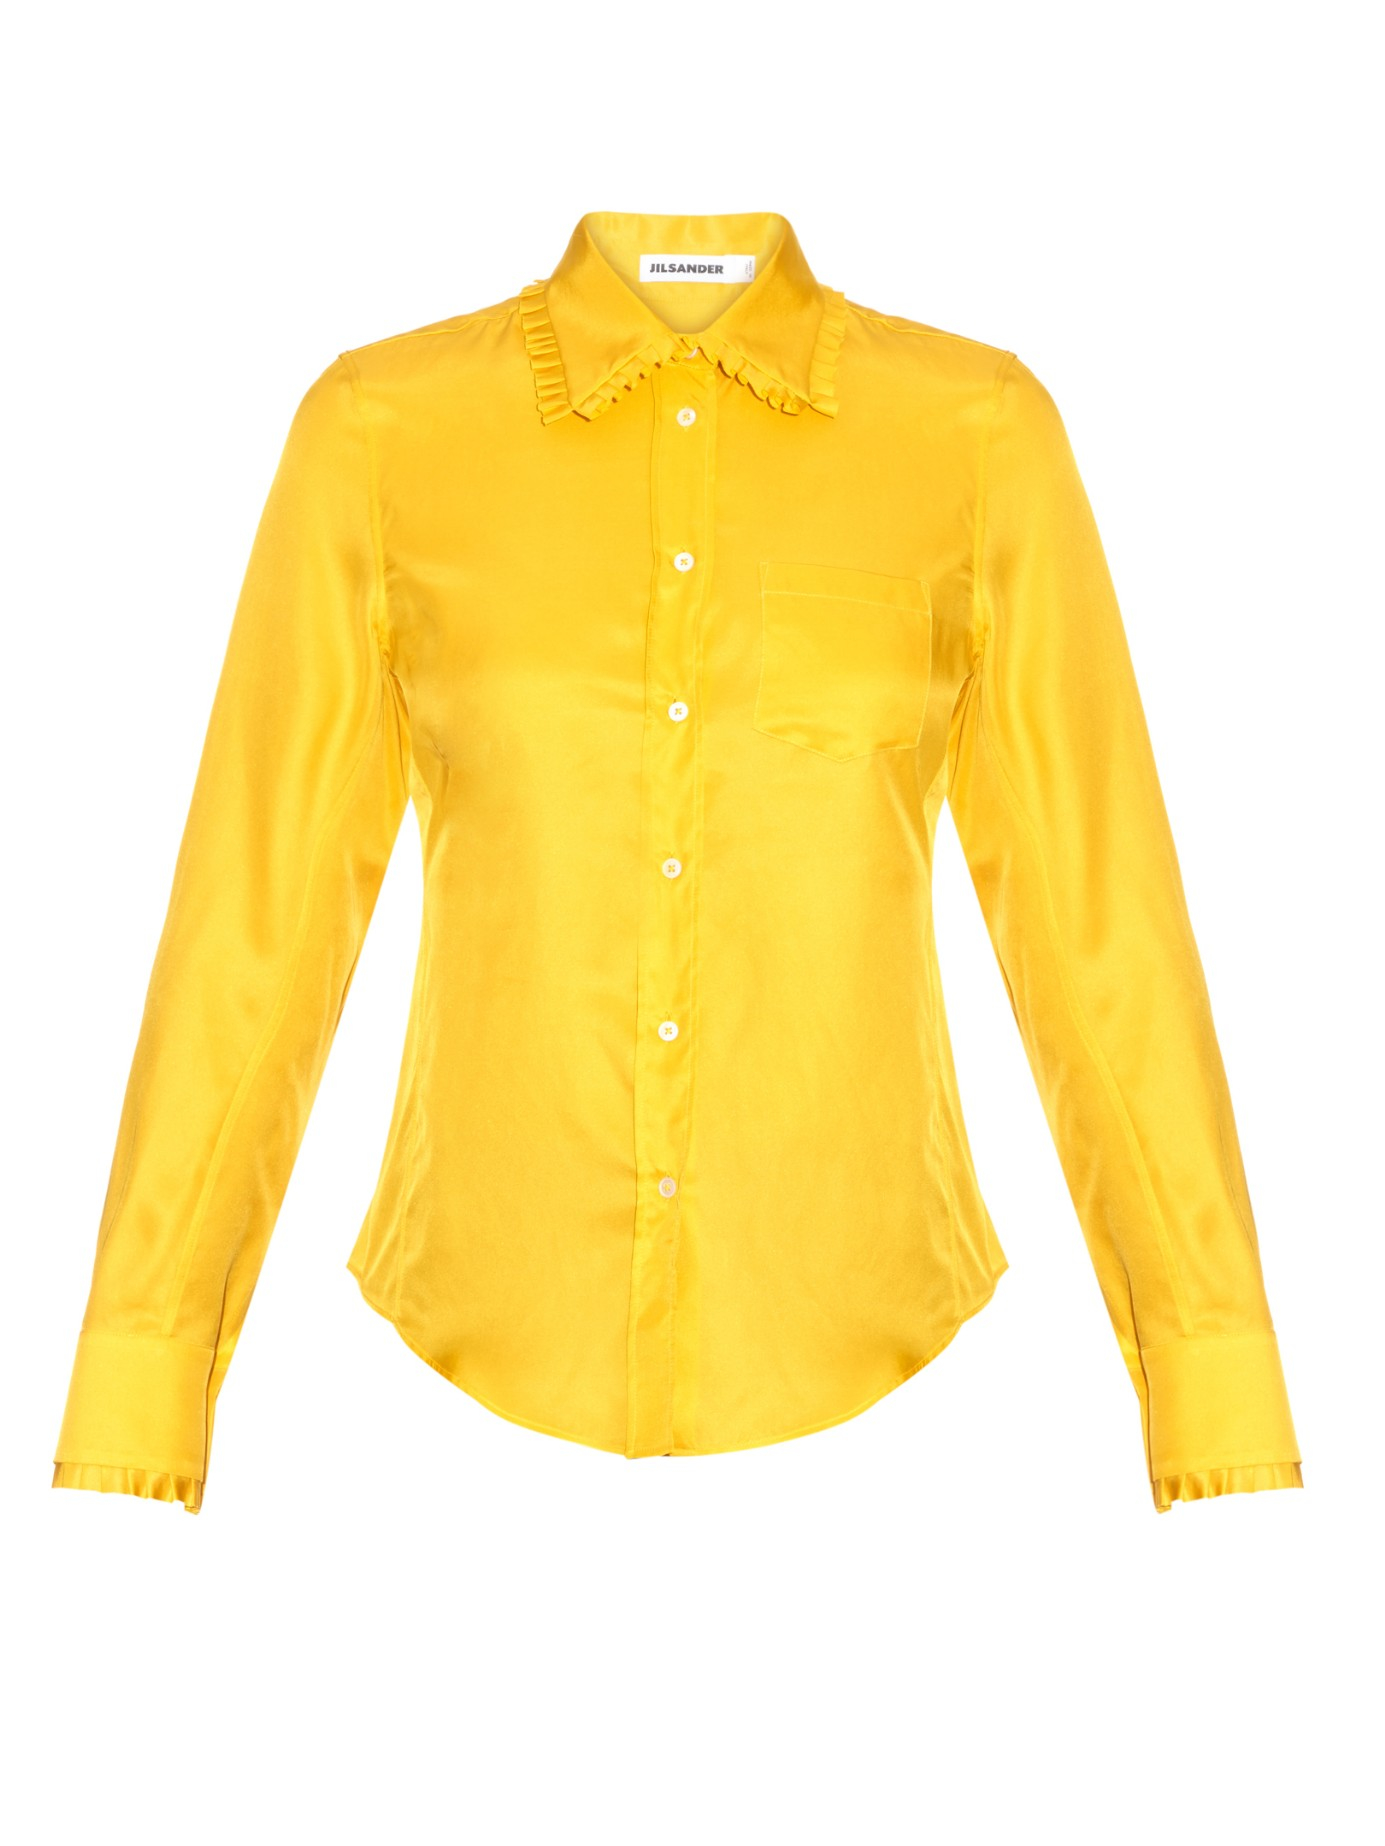 Lyst - Jil Sander Ruffle-trimmed Silk Shirt in Yellow